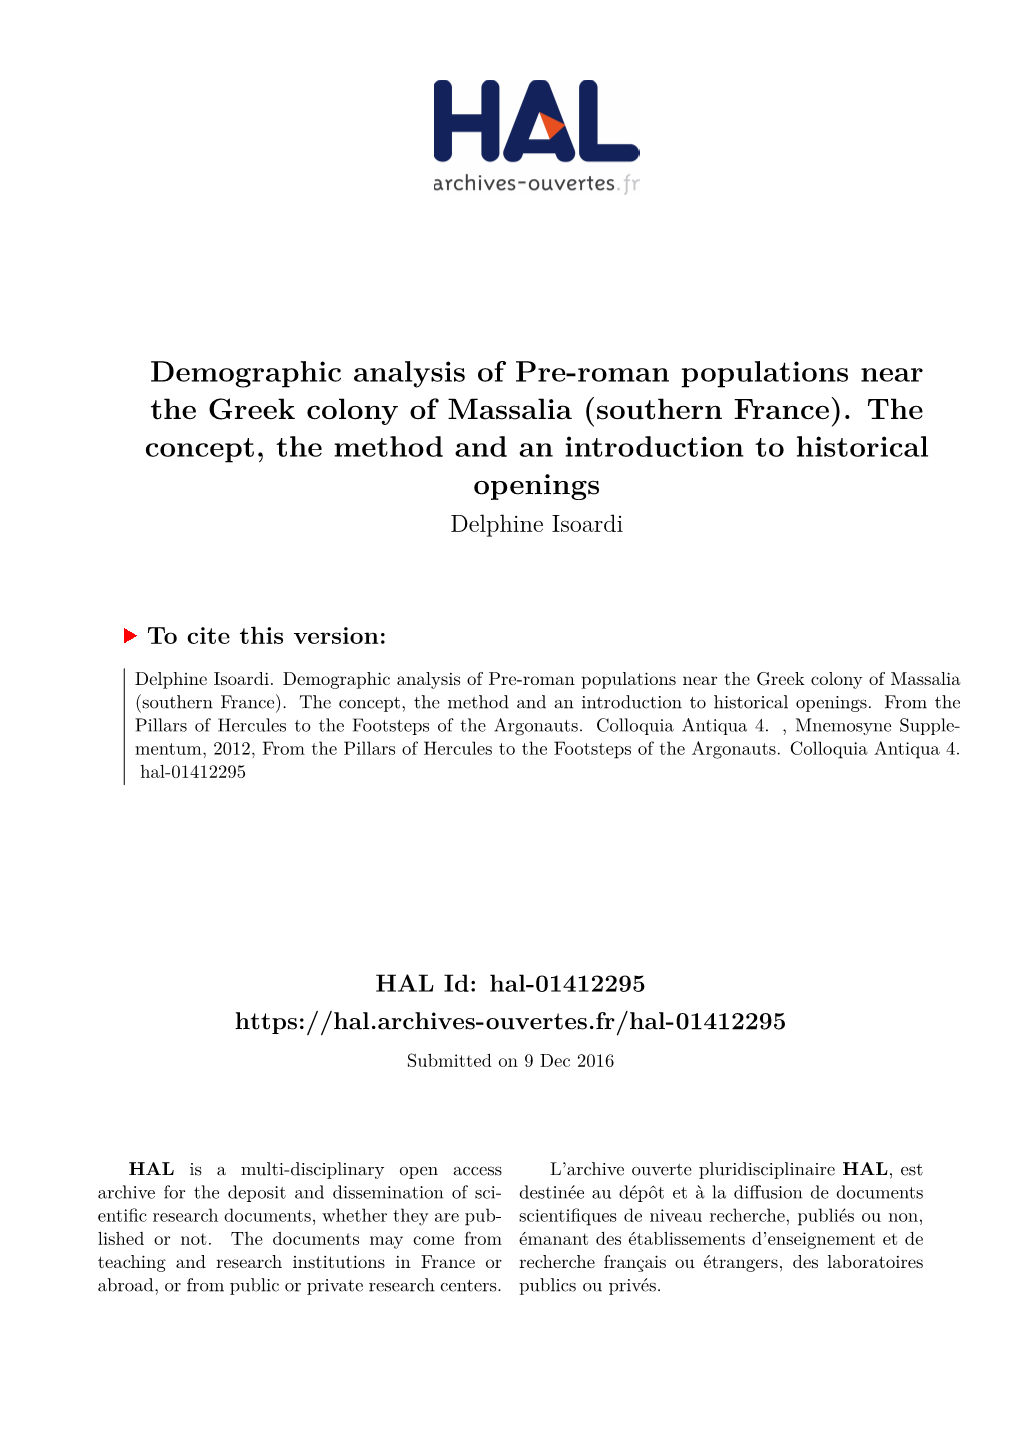 Demographic Analysis of Pre-Roman Populations Near the Greek Colony of Massalia (Southern France)